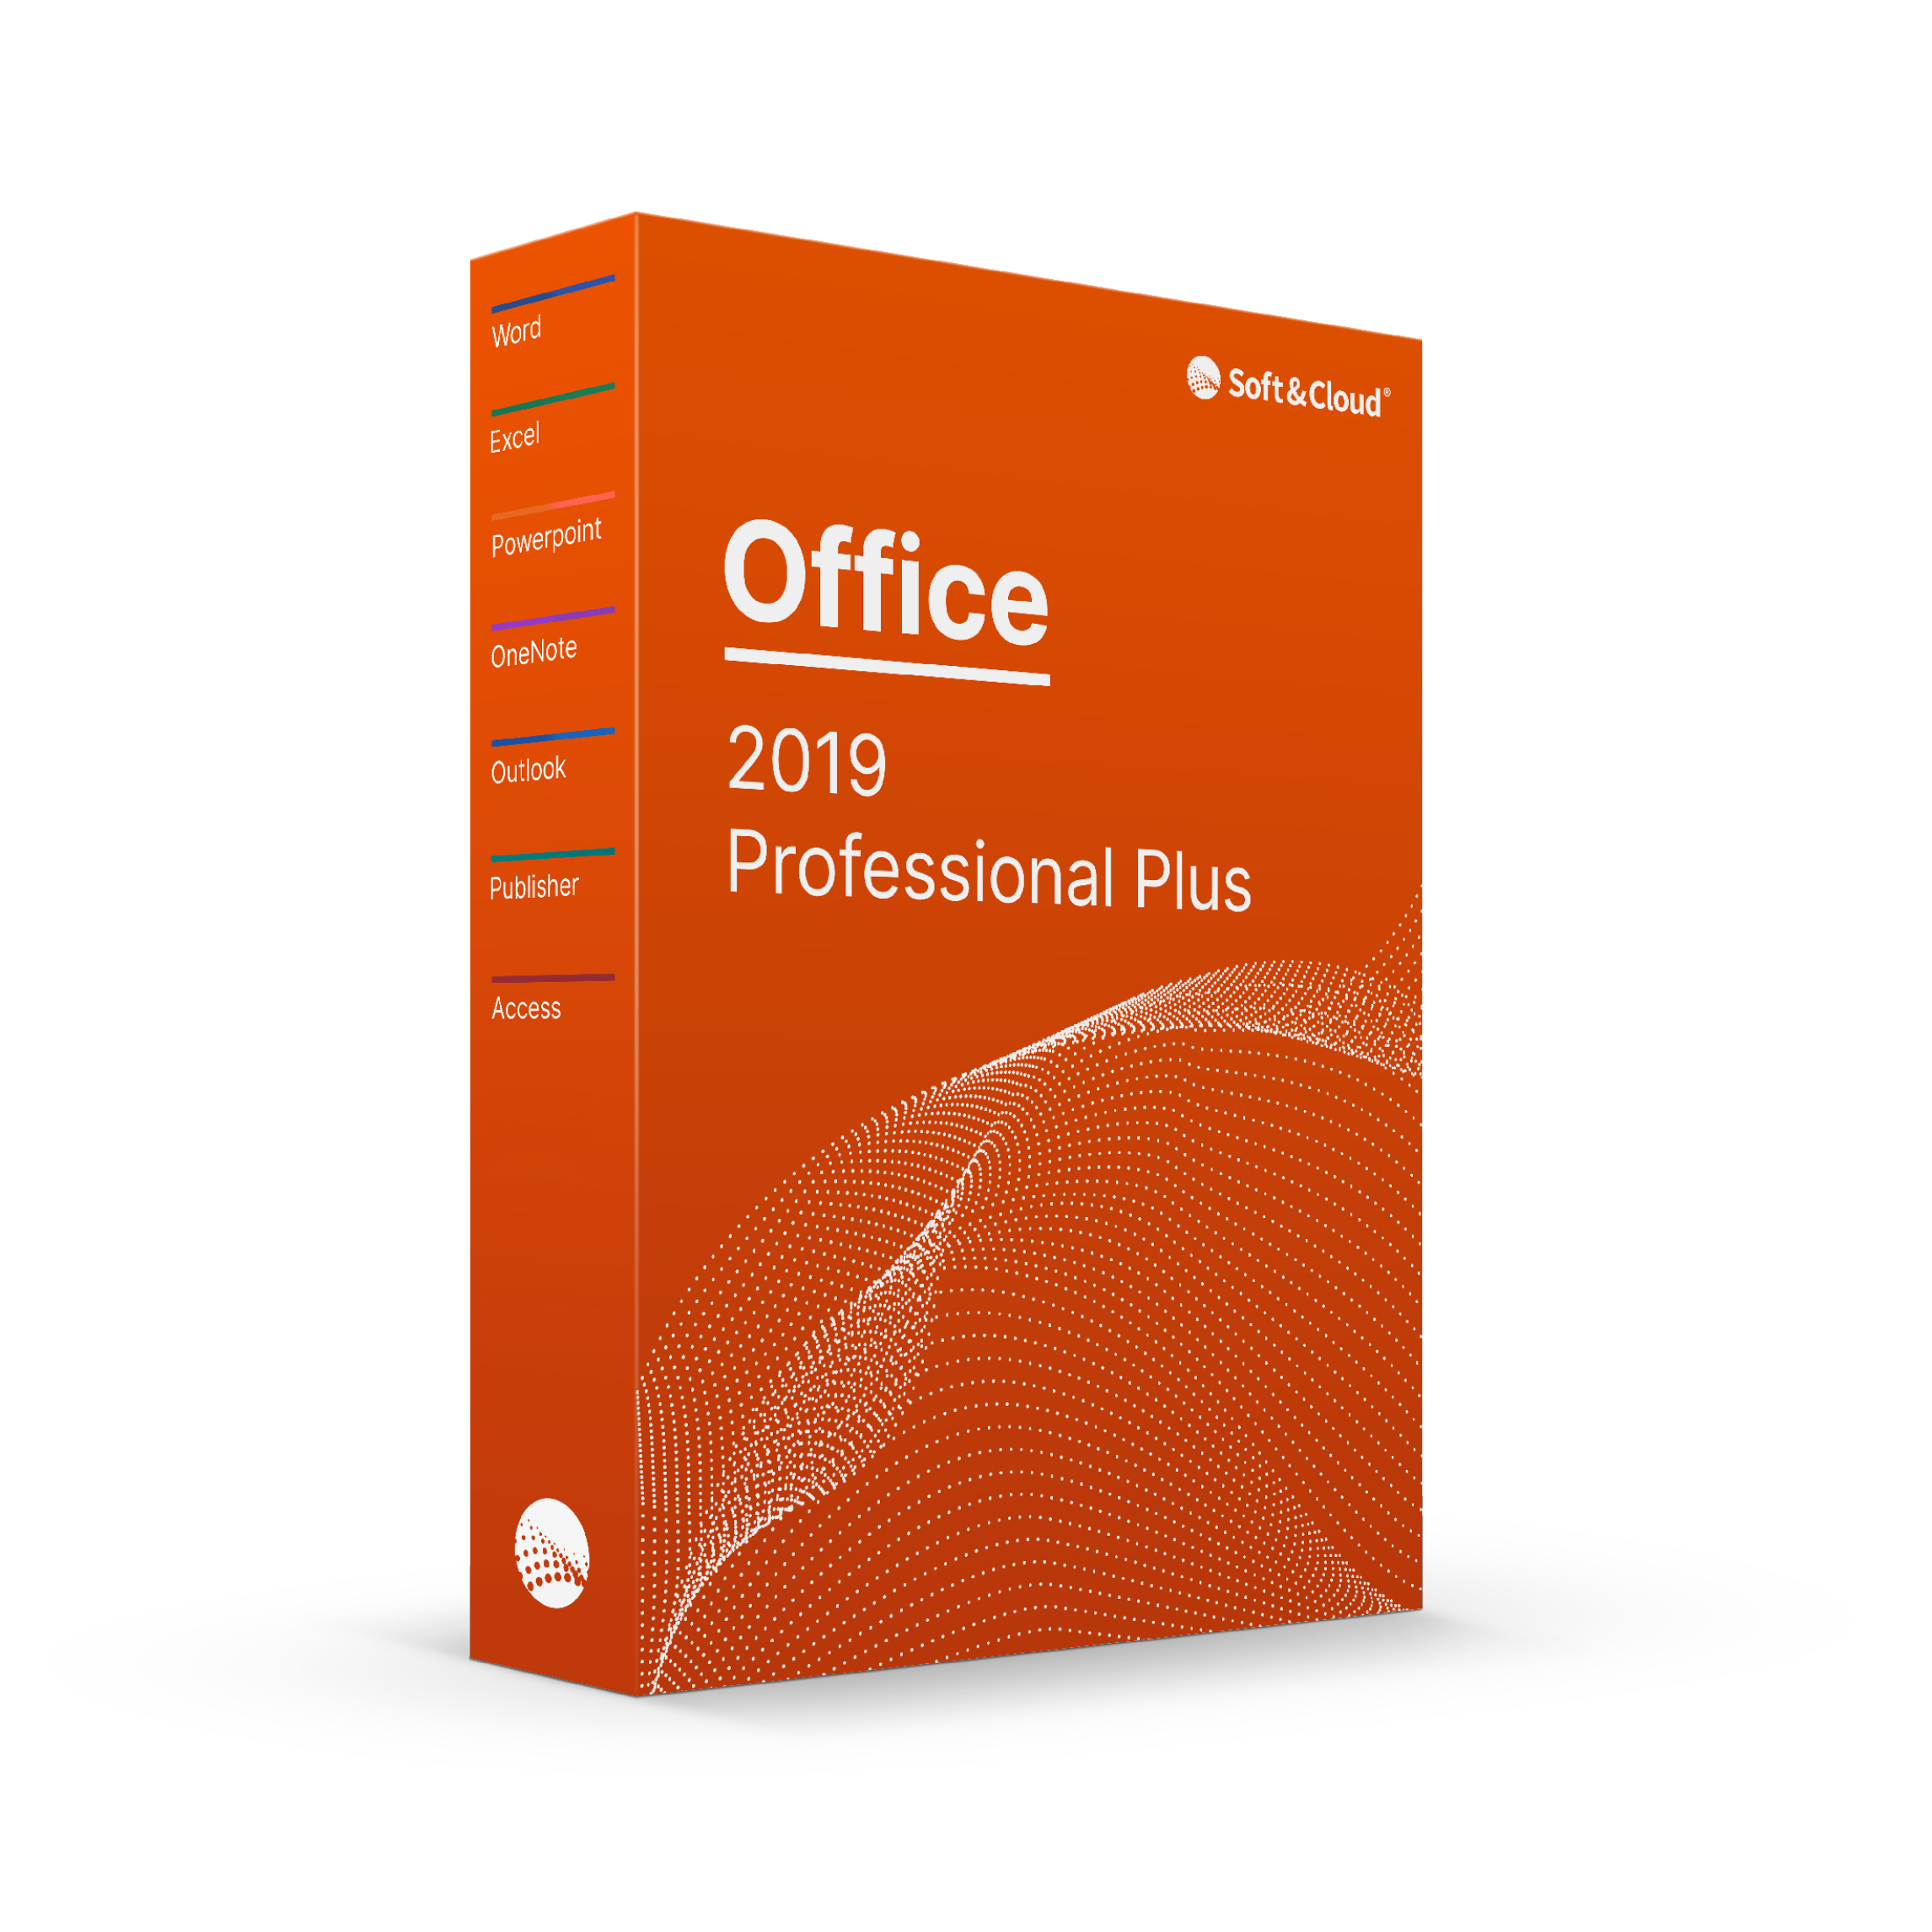 Office 2019 Professional Plus 